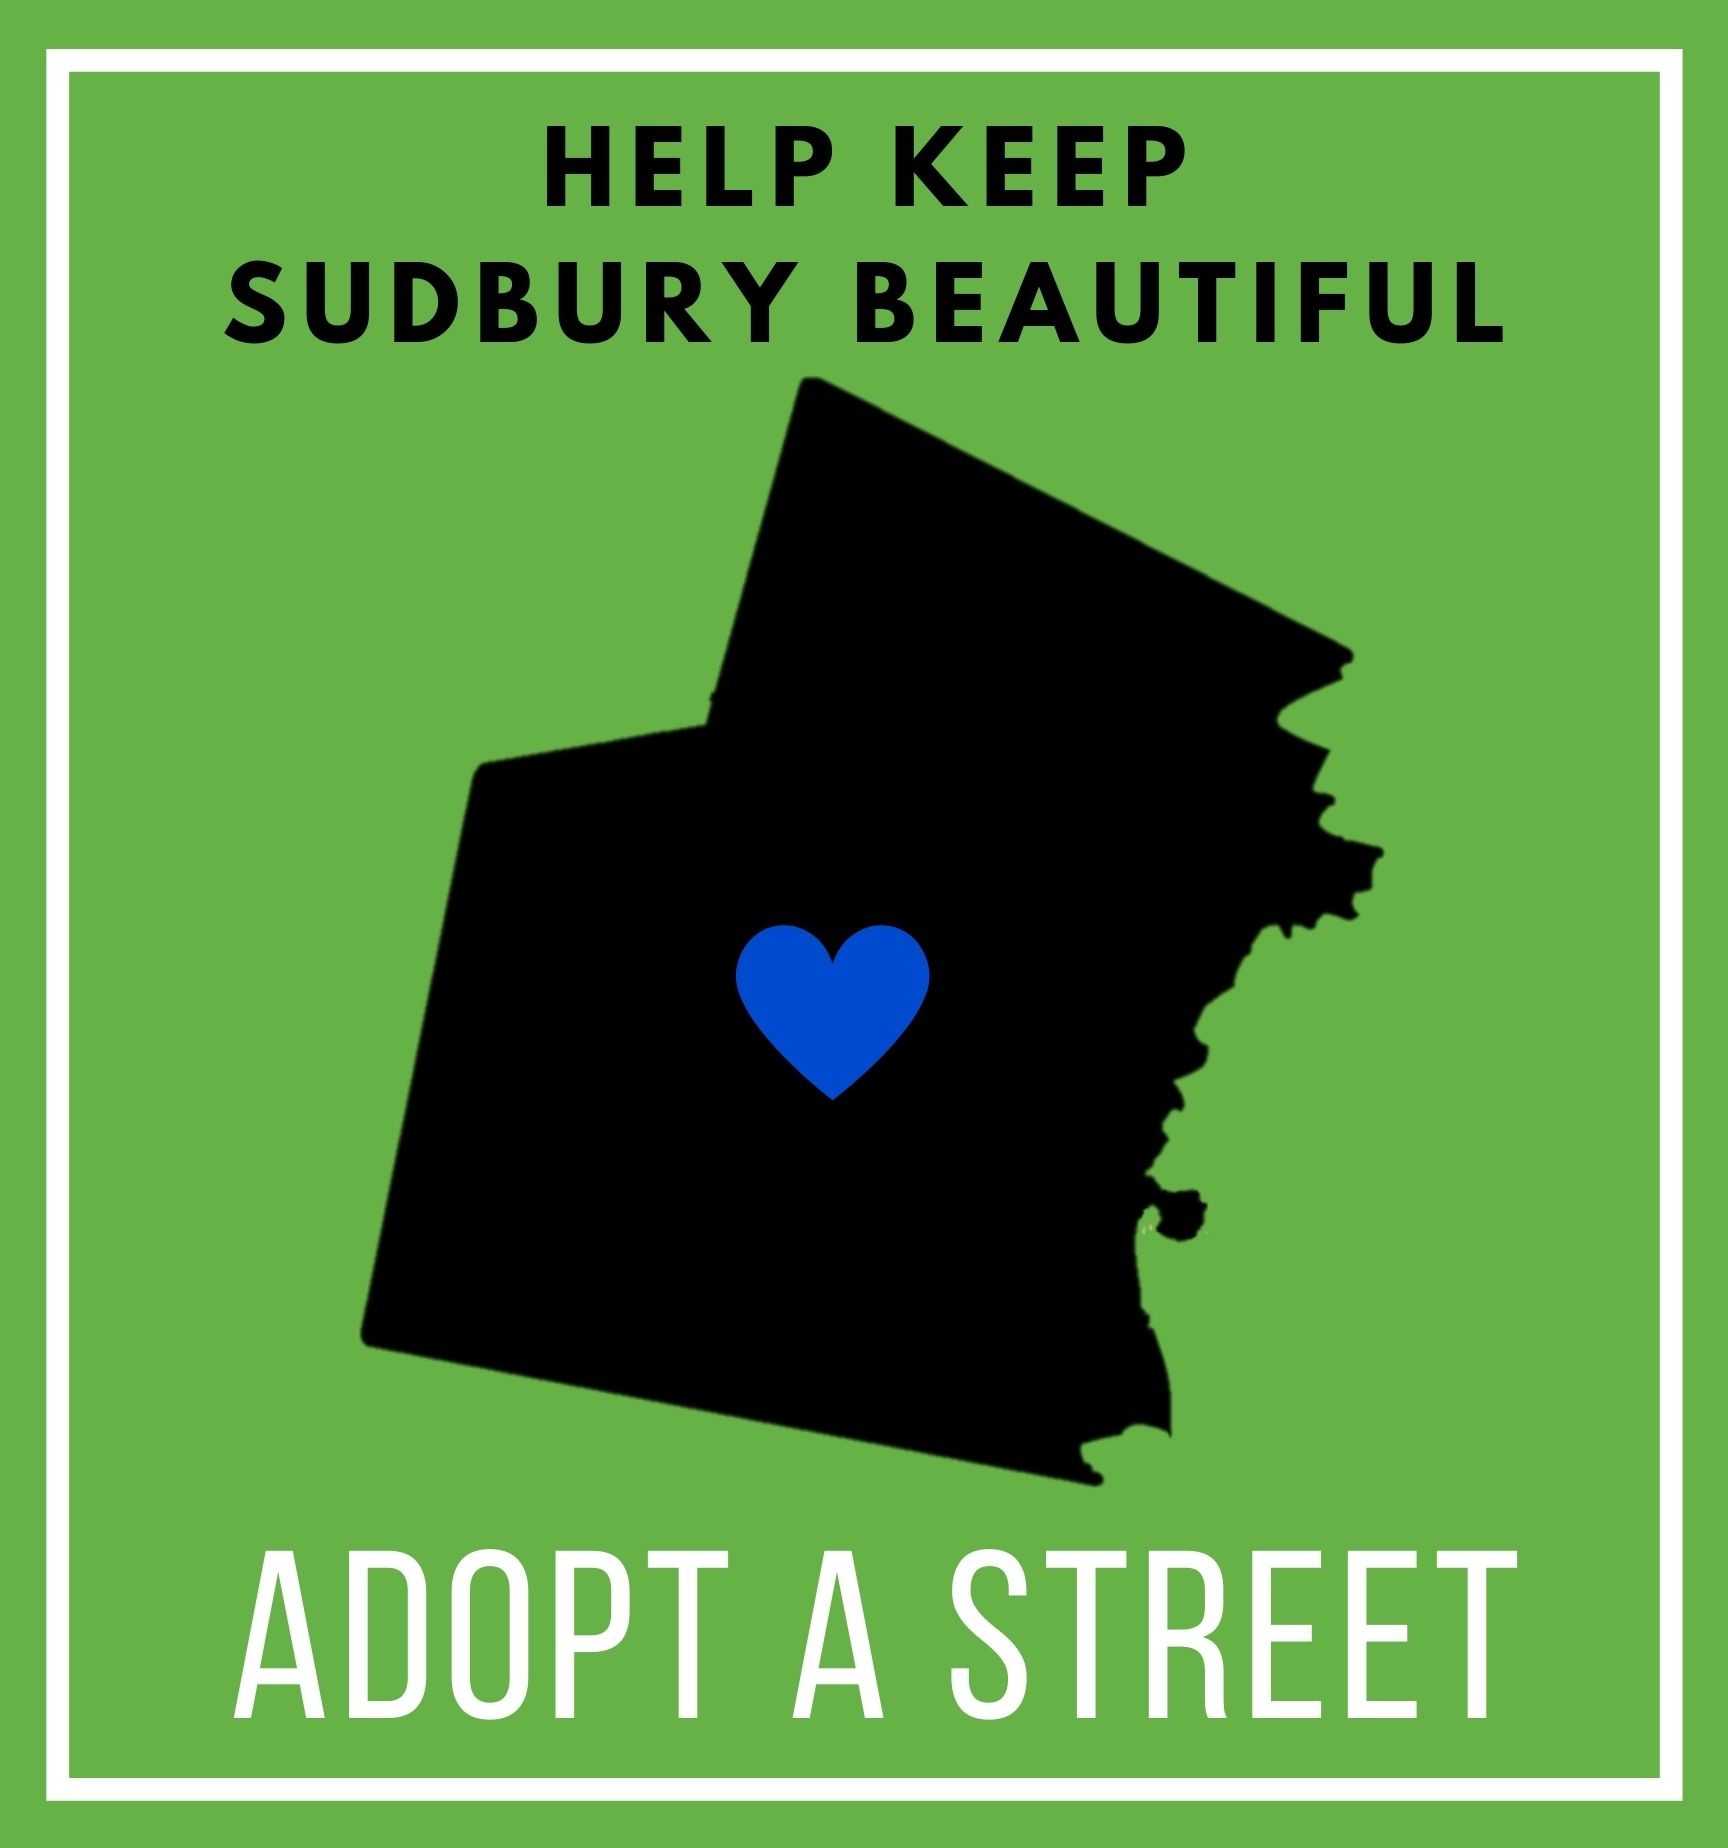 Help keep Sudbury beautiful. Adopt a Street.